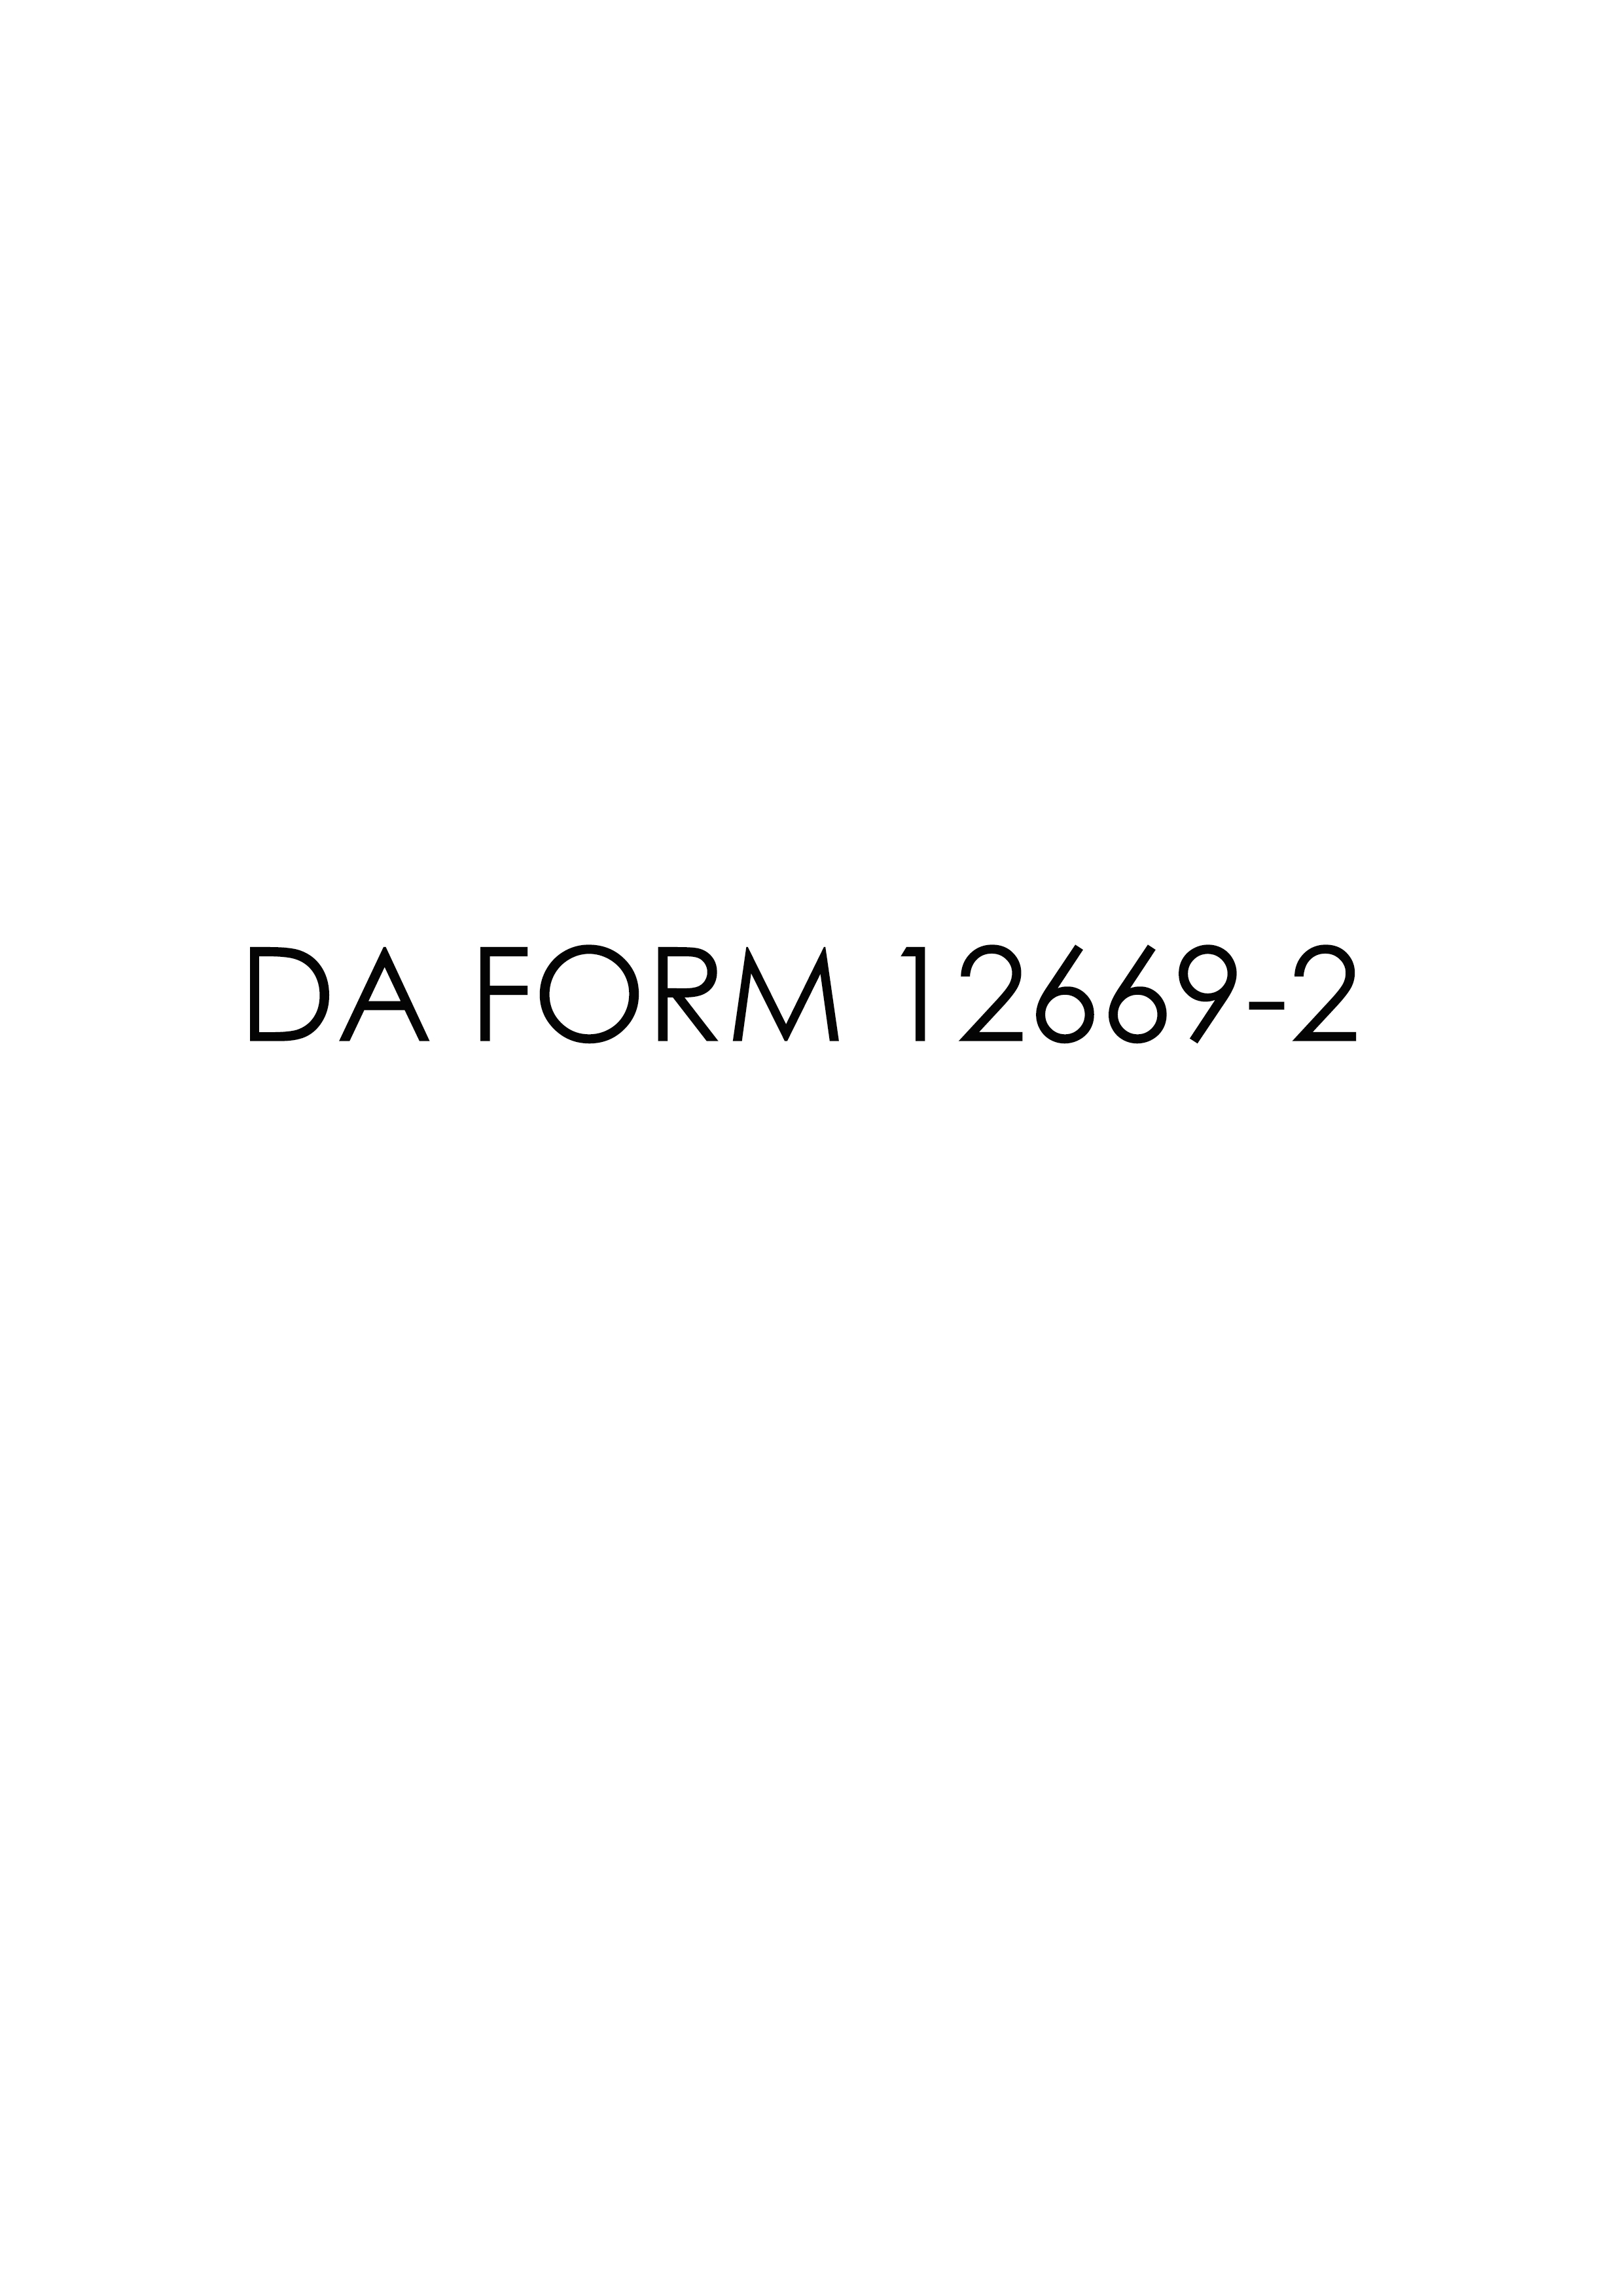 da Form 12669-2 fillable